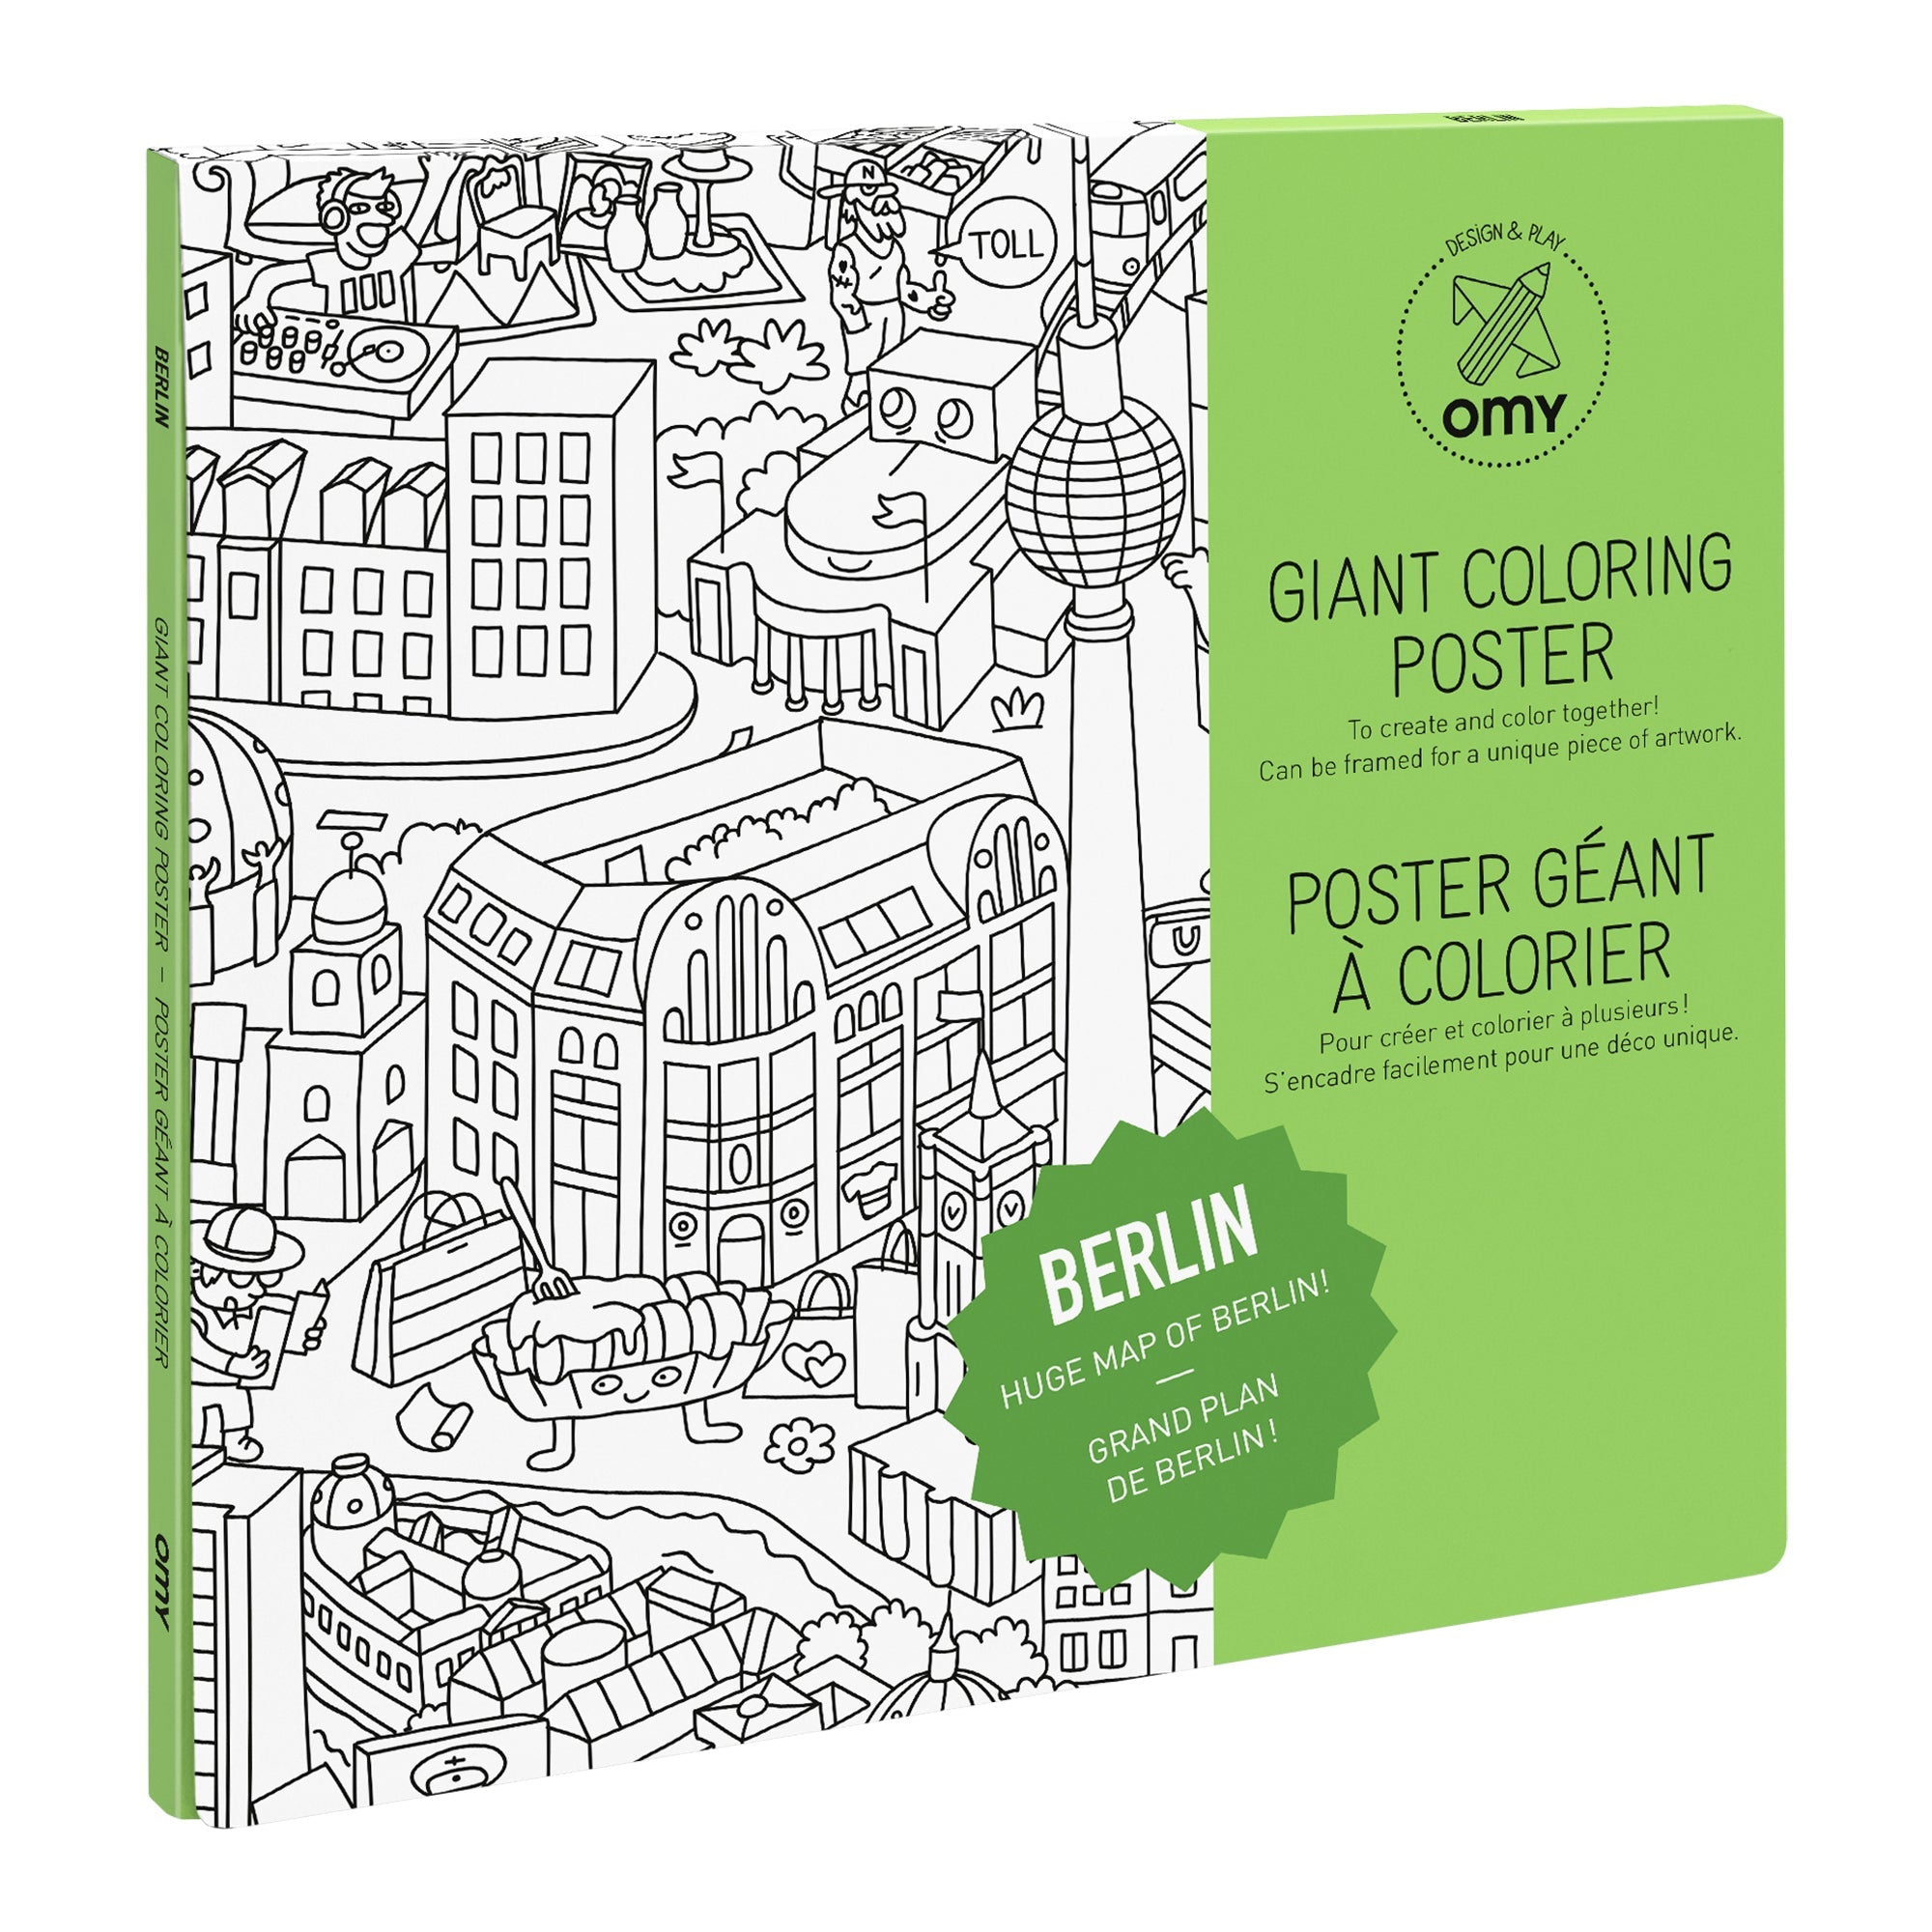 Poster Géant à colorier BERLIN by OMY